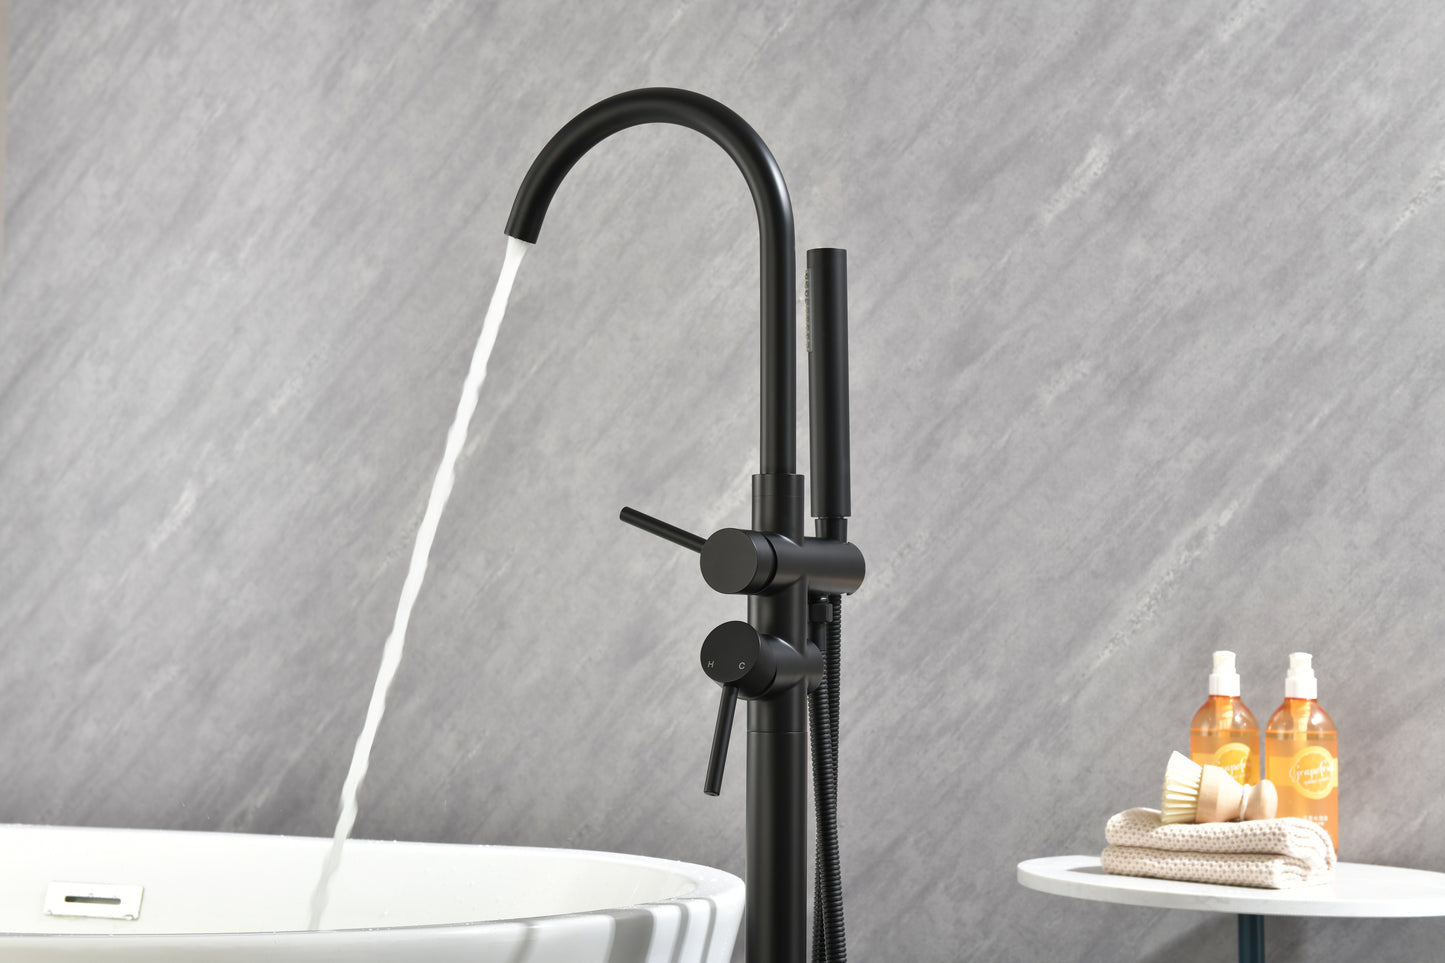 Mount Bathtub Faucet Freestanding Tub Filler Matte Black Standing High Flow Shower Faucets with Handheld Shower Mixer Taps Swivel Spout